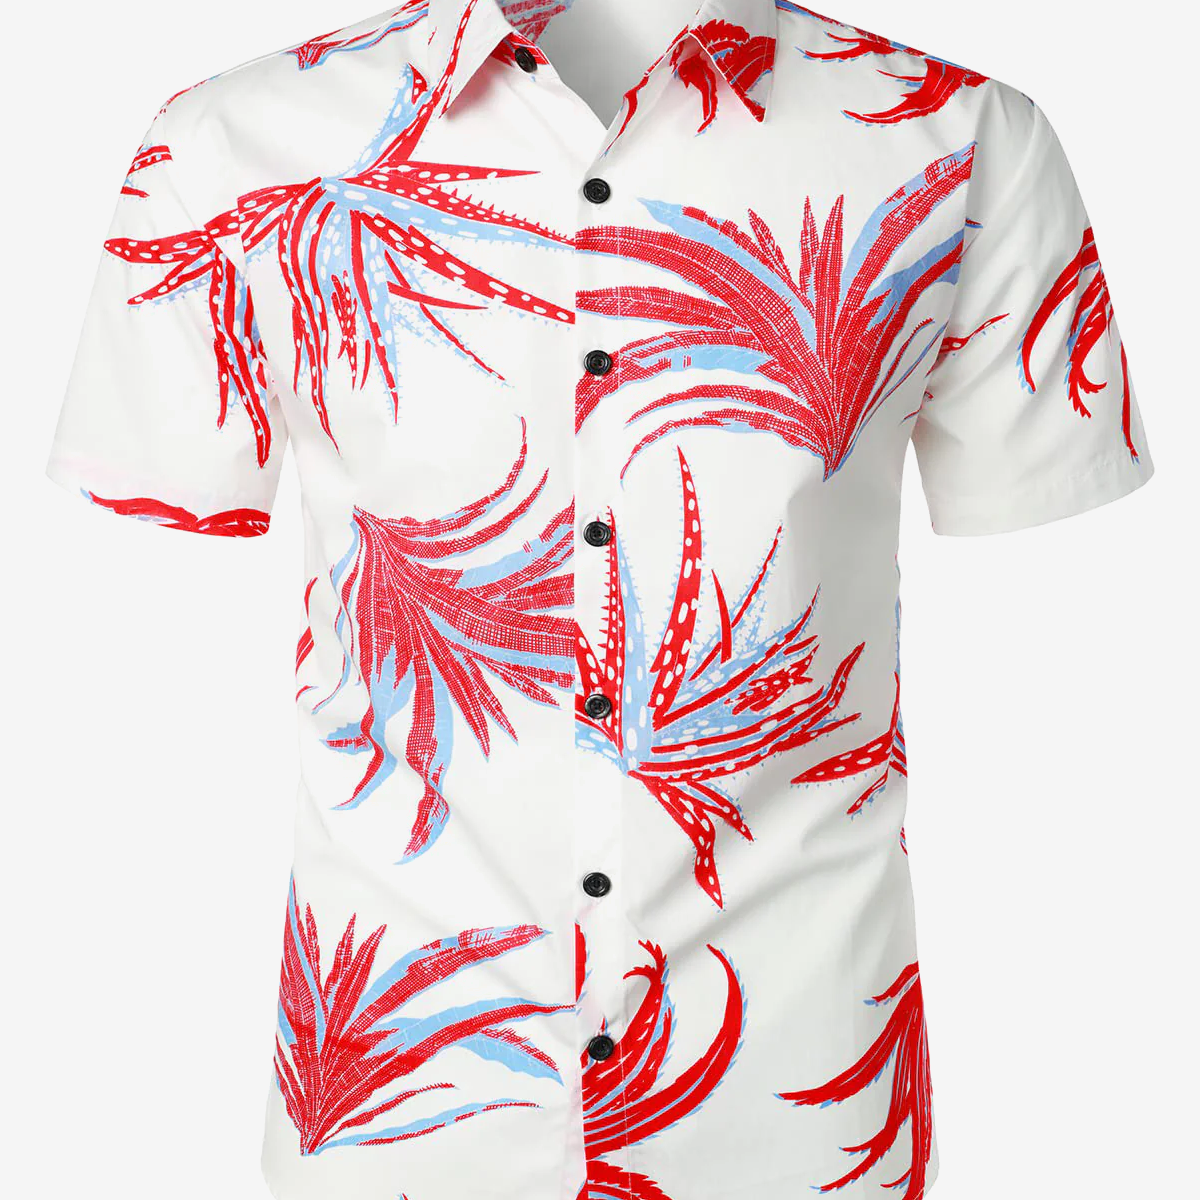 Homme Floral Button Up Casual 100% Coton Summer Plant Vacation Chemise à manches courtes